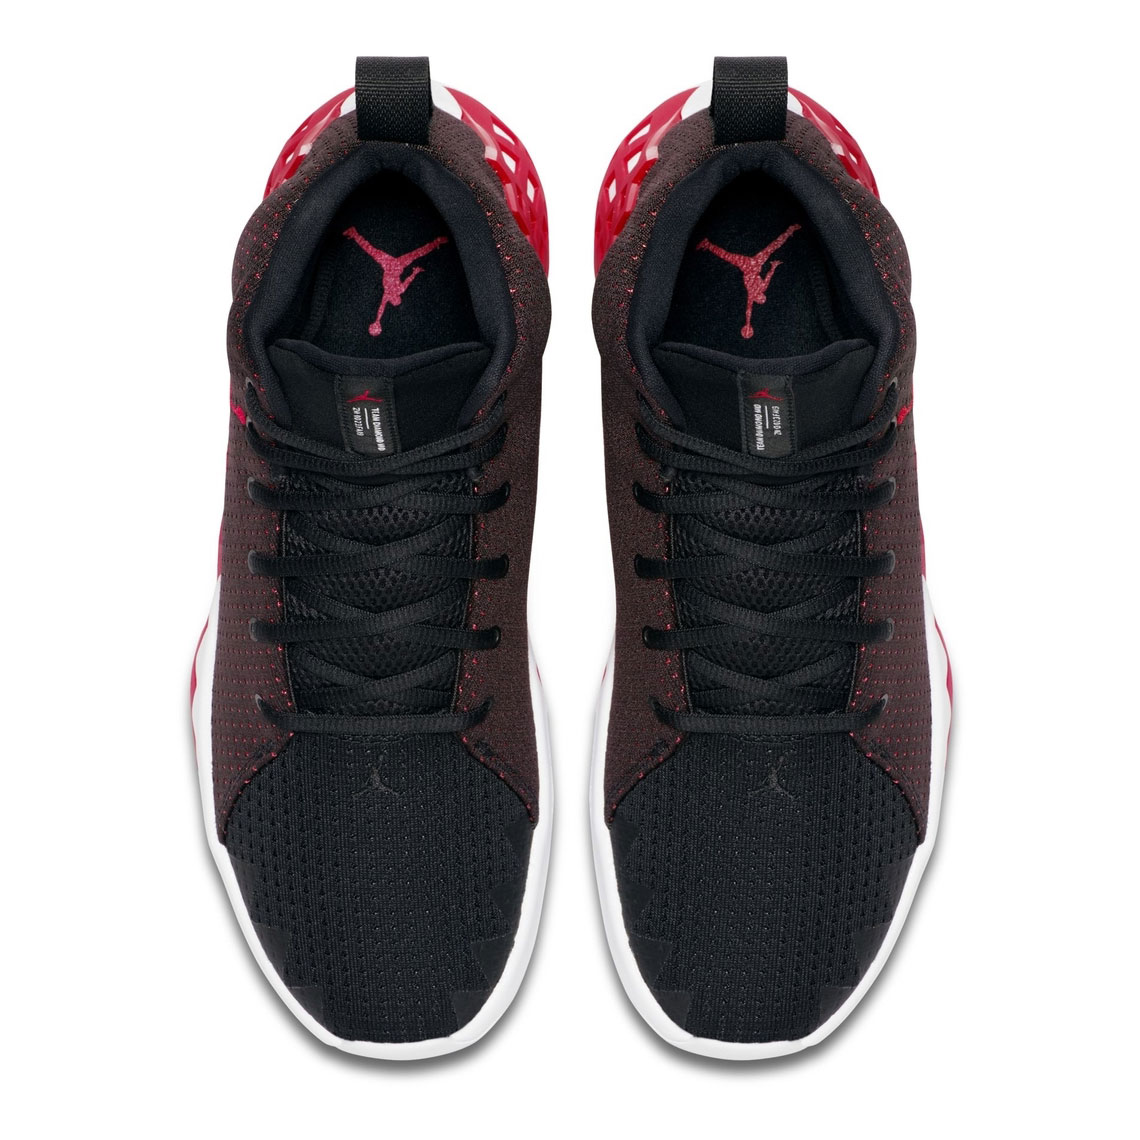 Jordan Jumpman Diamond Mid Release Info | SneakerNews.com